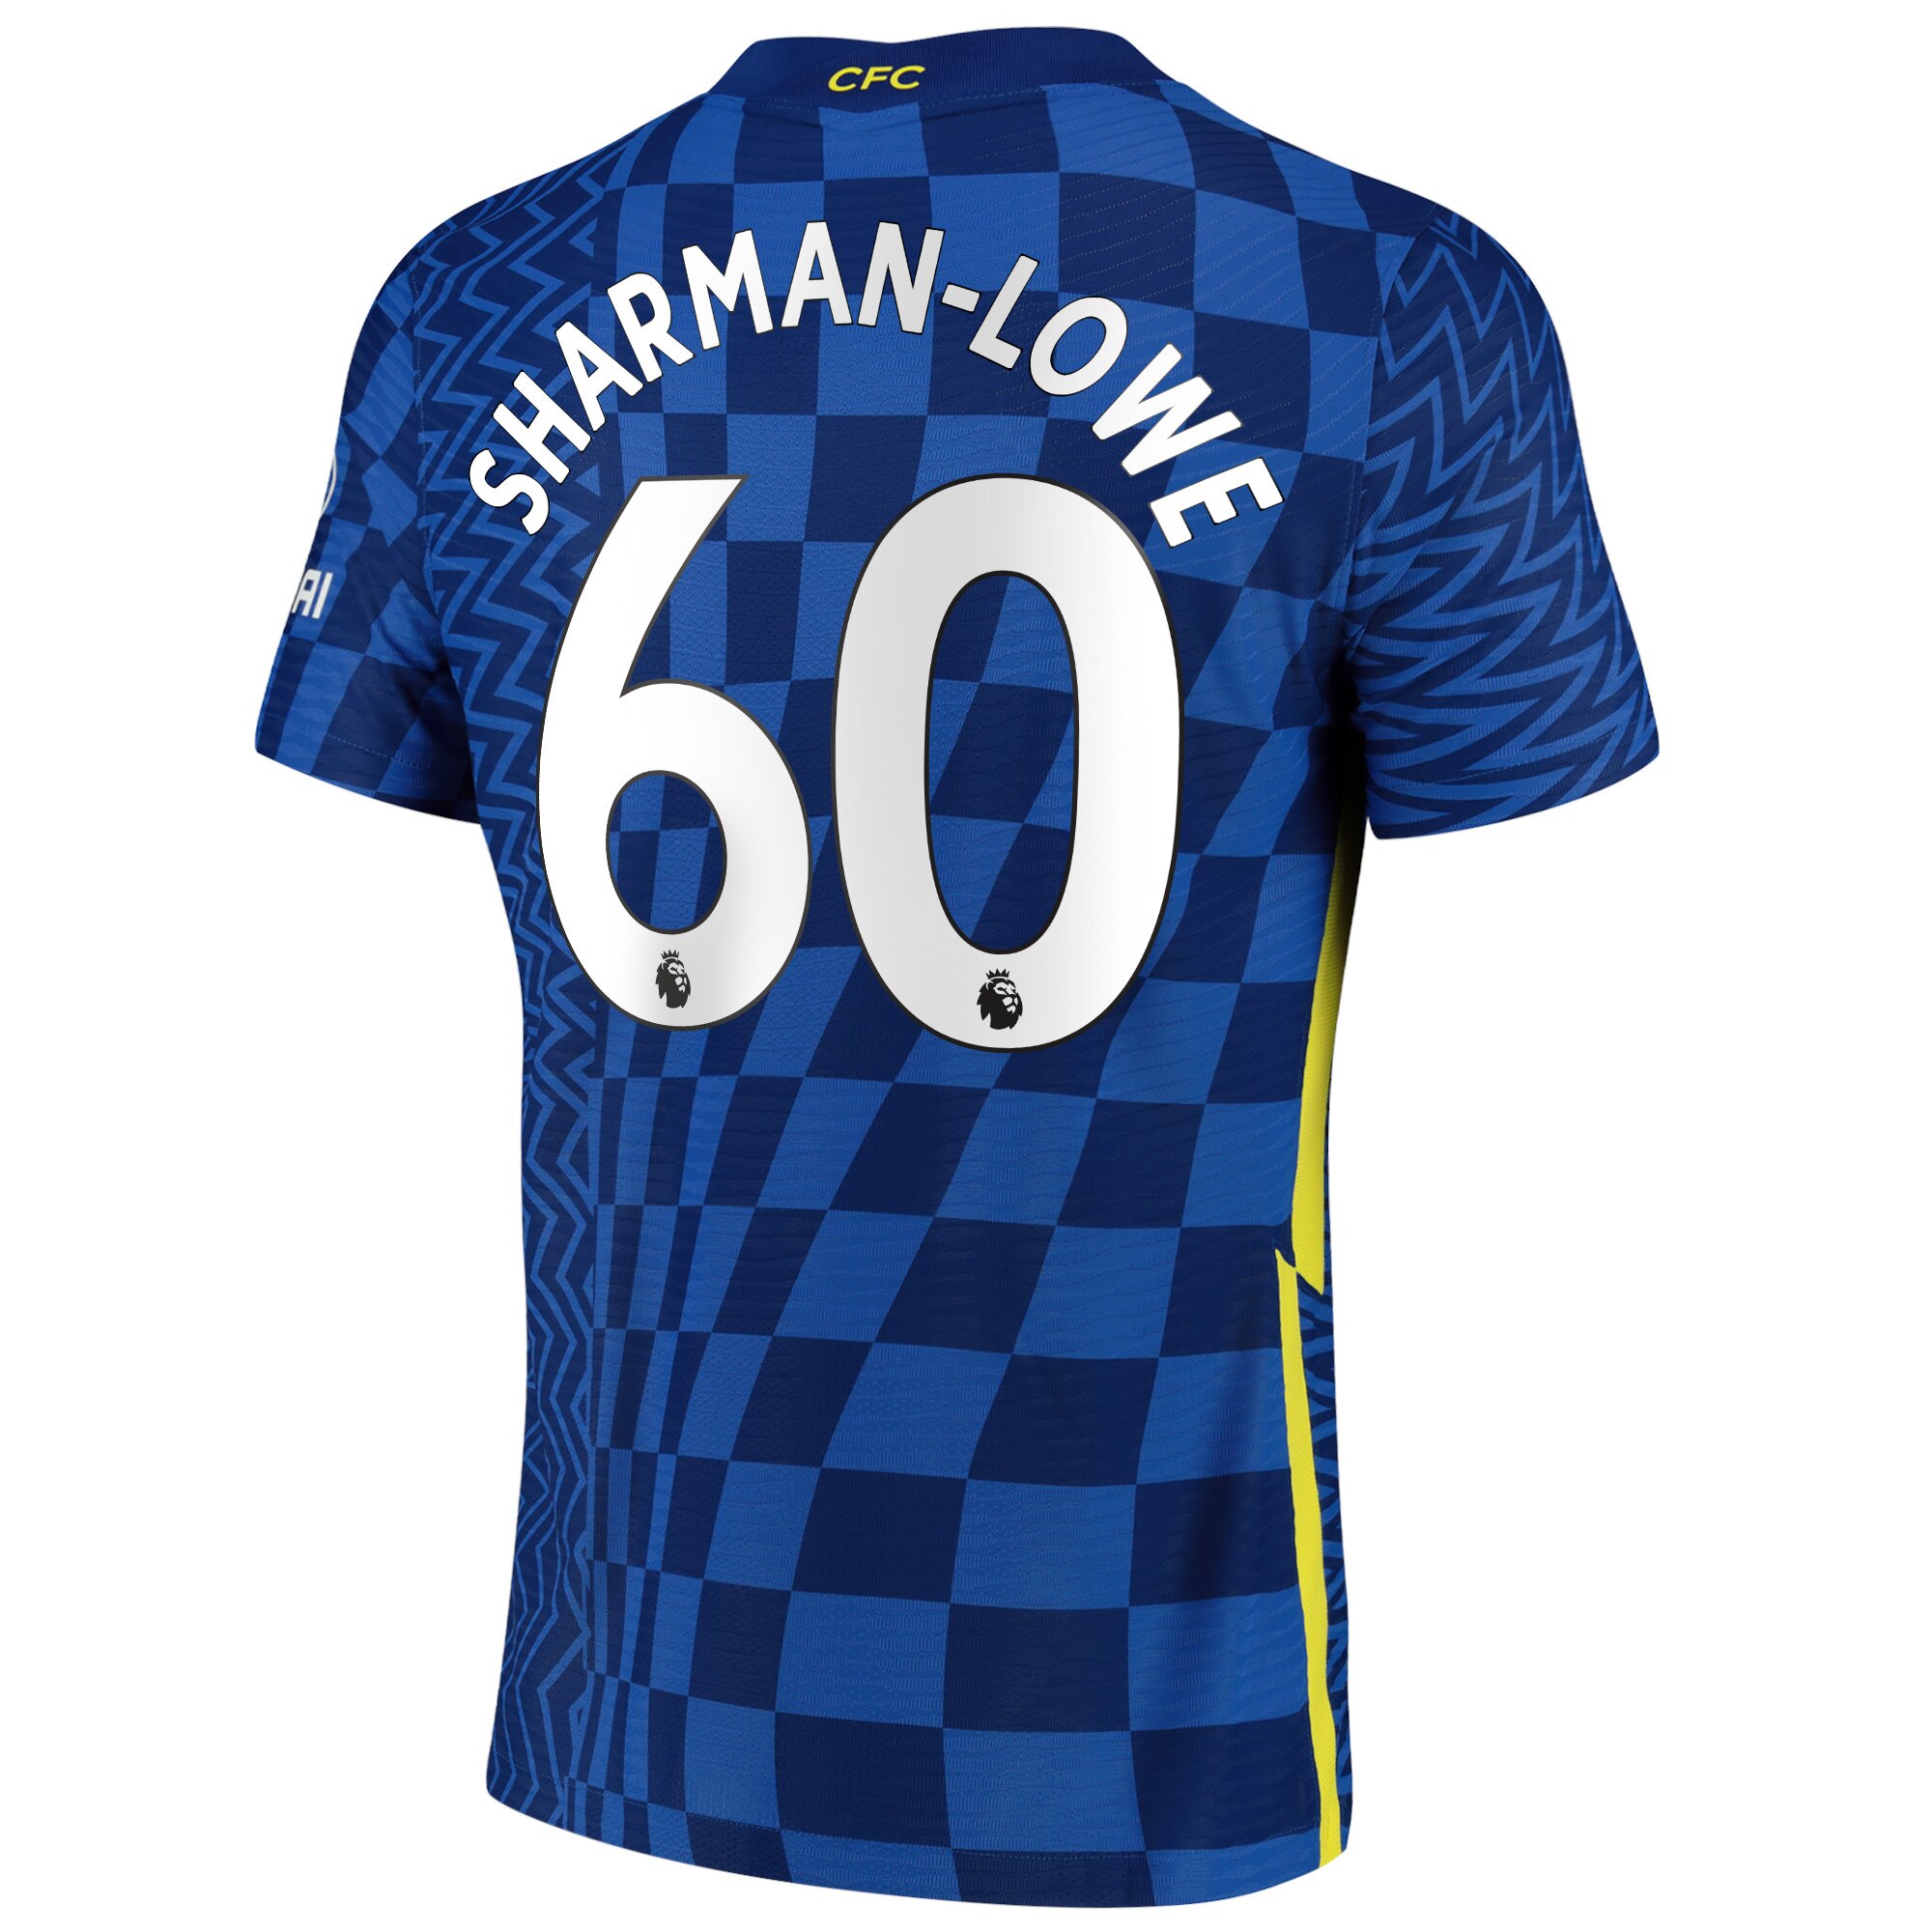 Chelsea Home Vapor Match Shirt 2021-22 with Sharman-lowe 60 printing